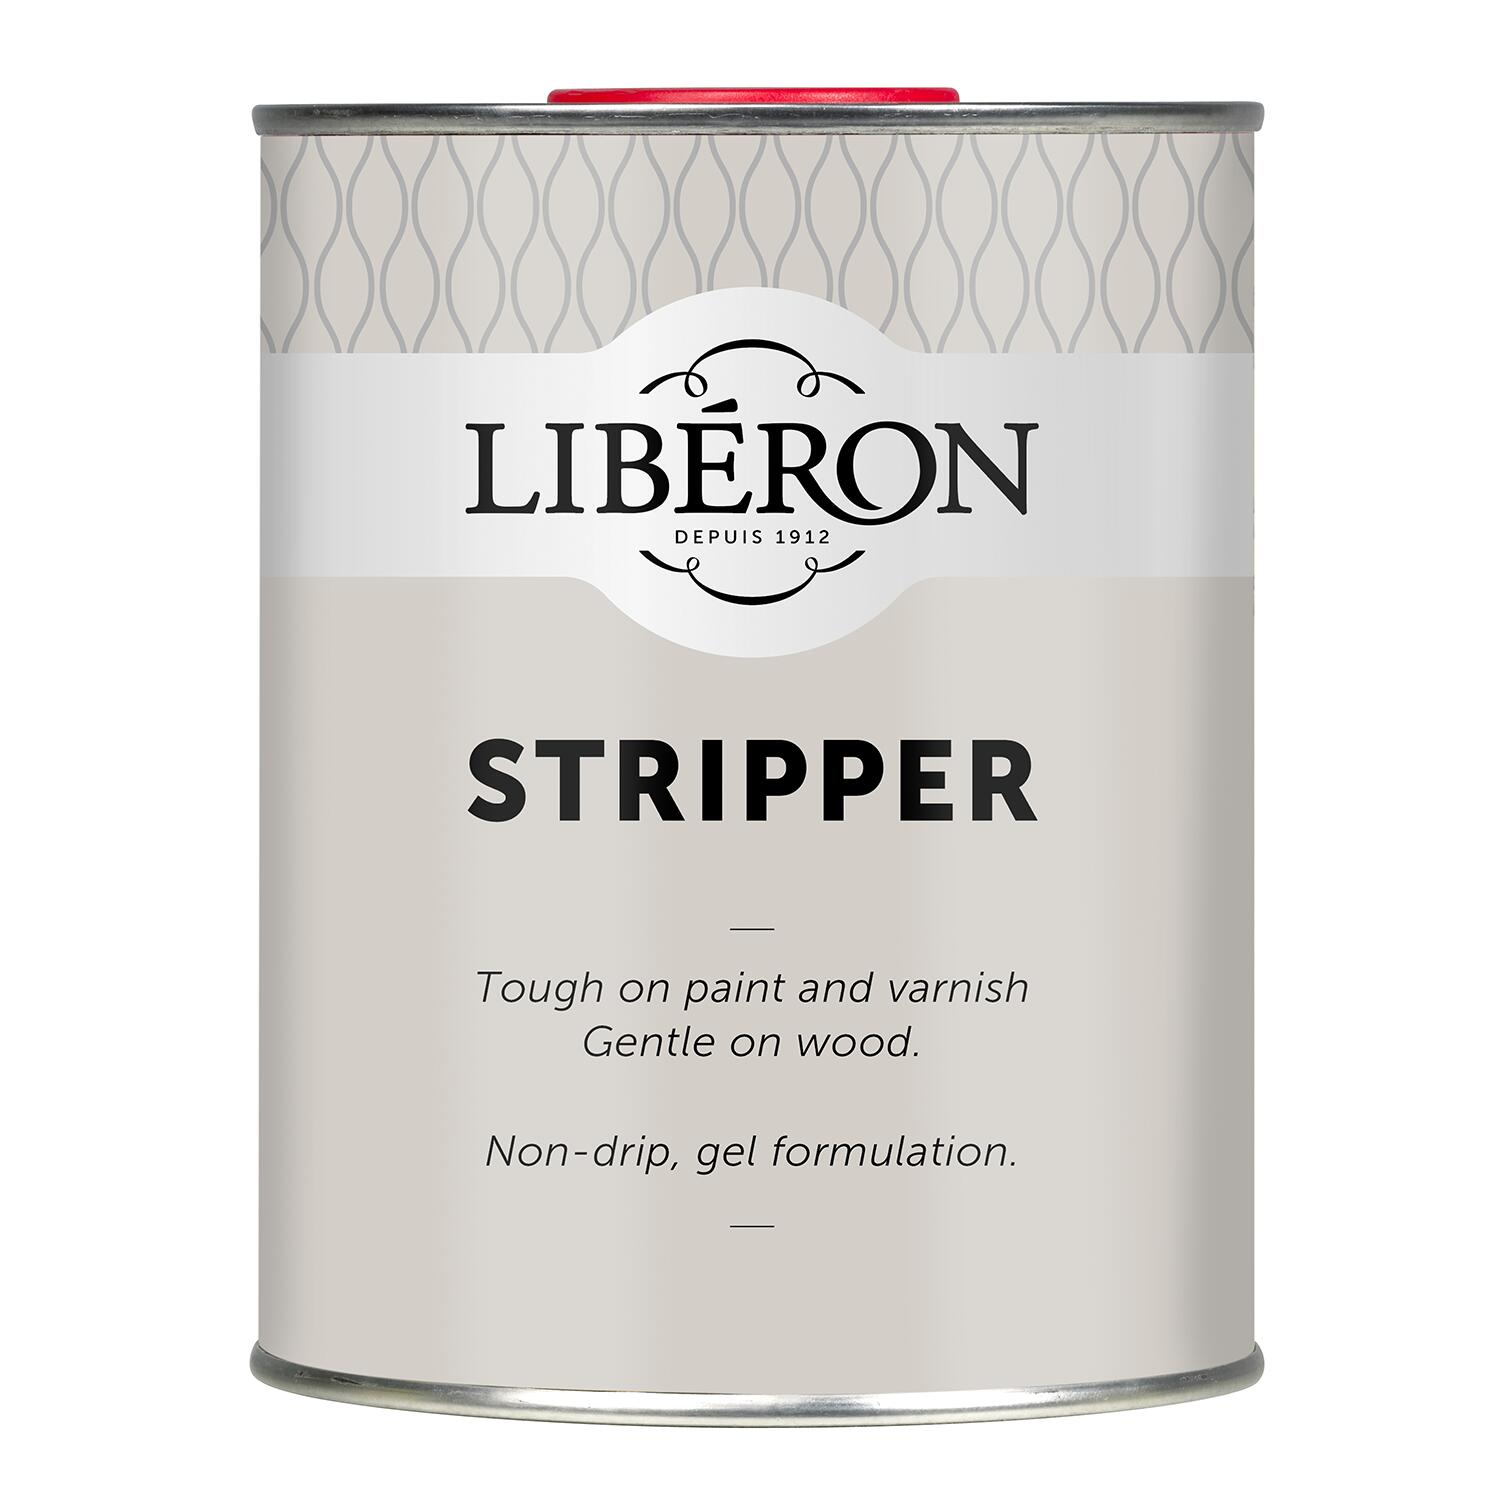 Stripper Liberon 500ml